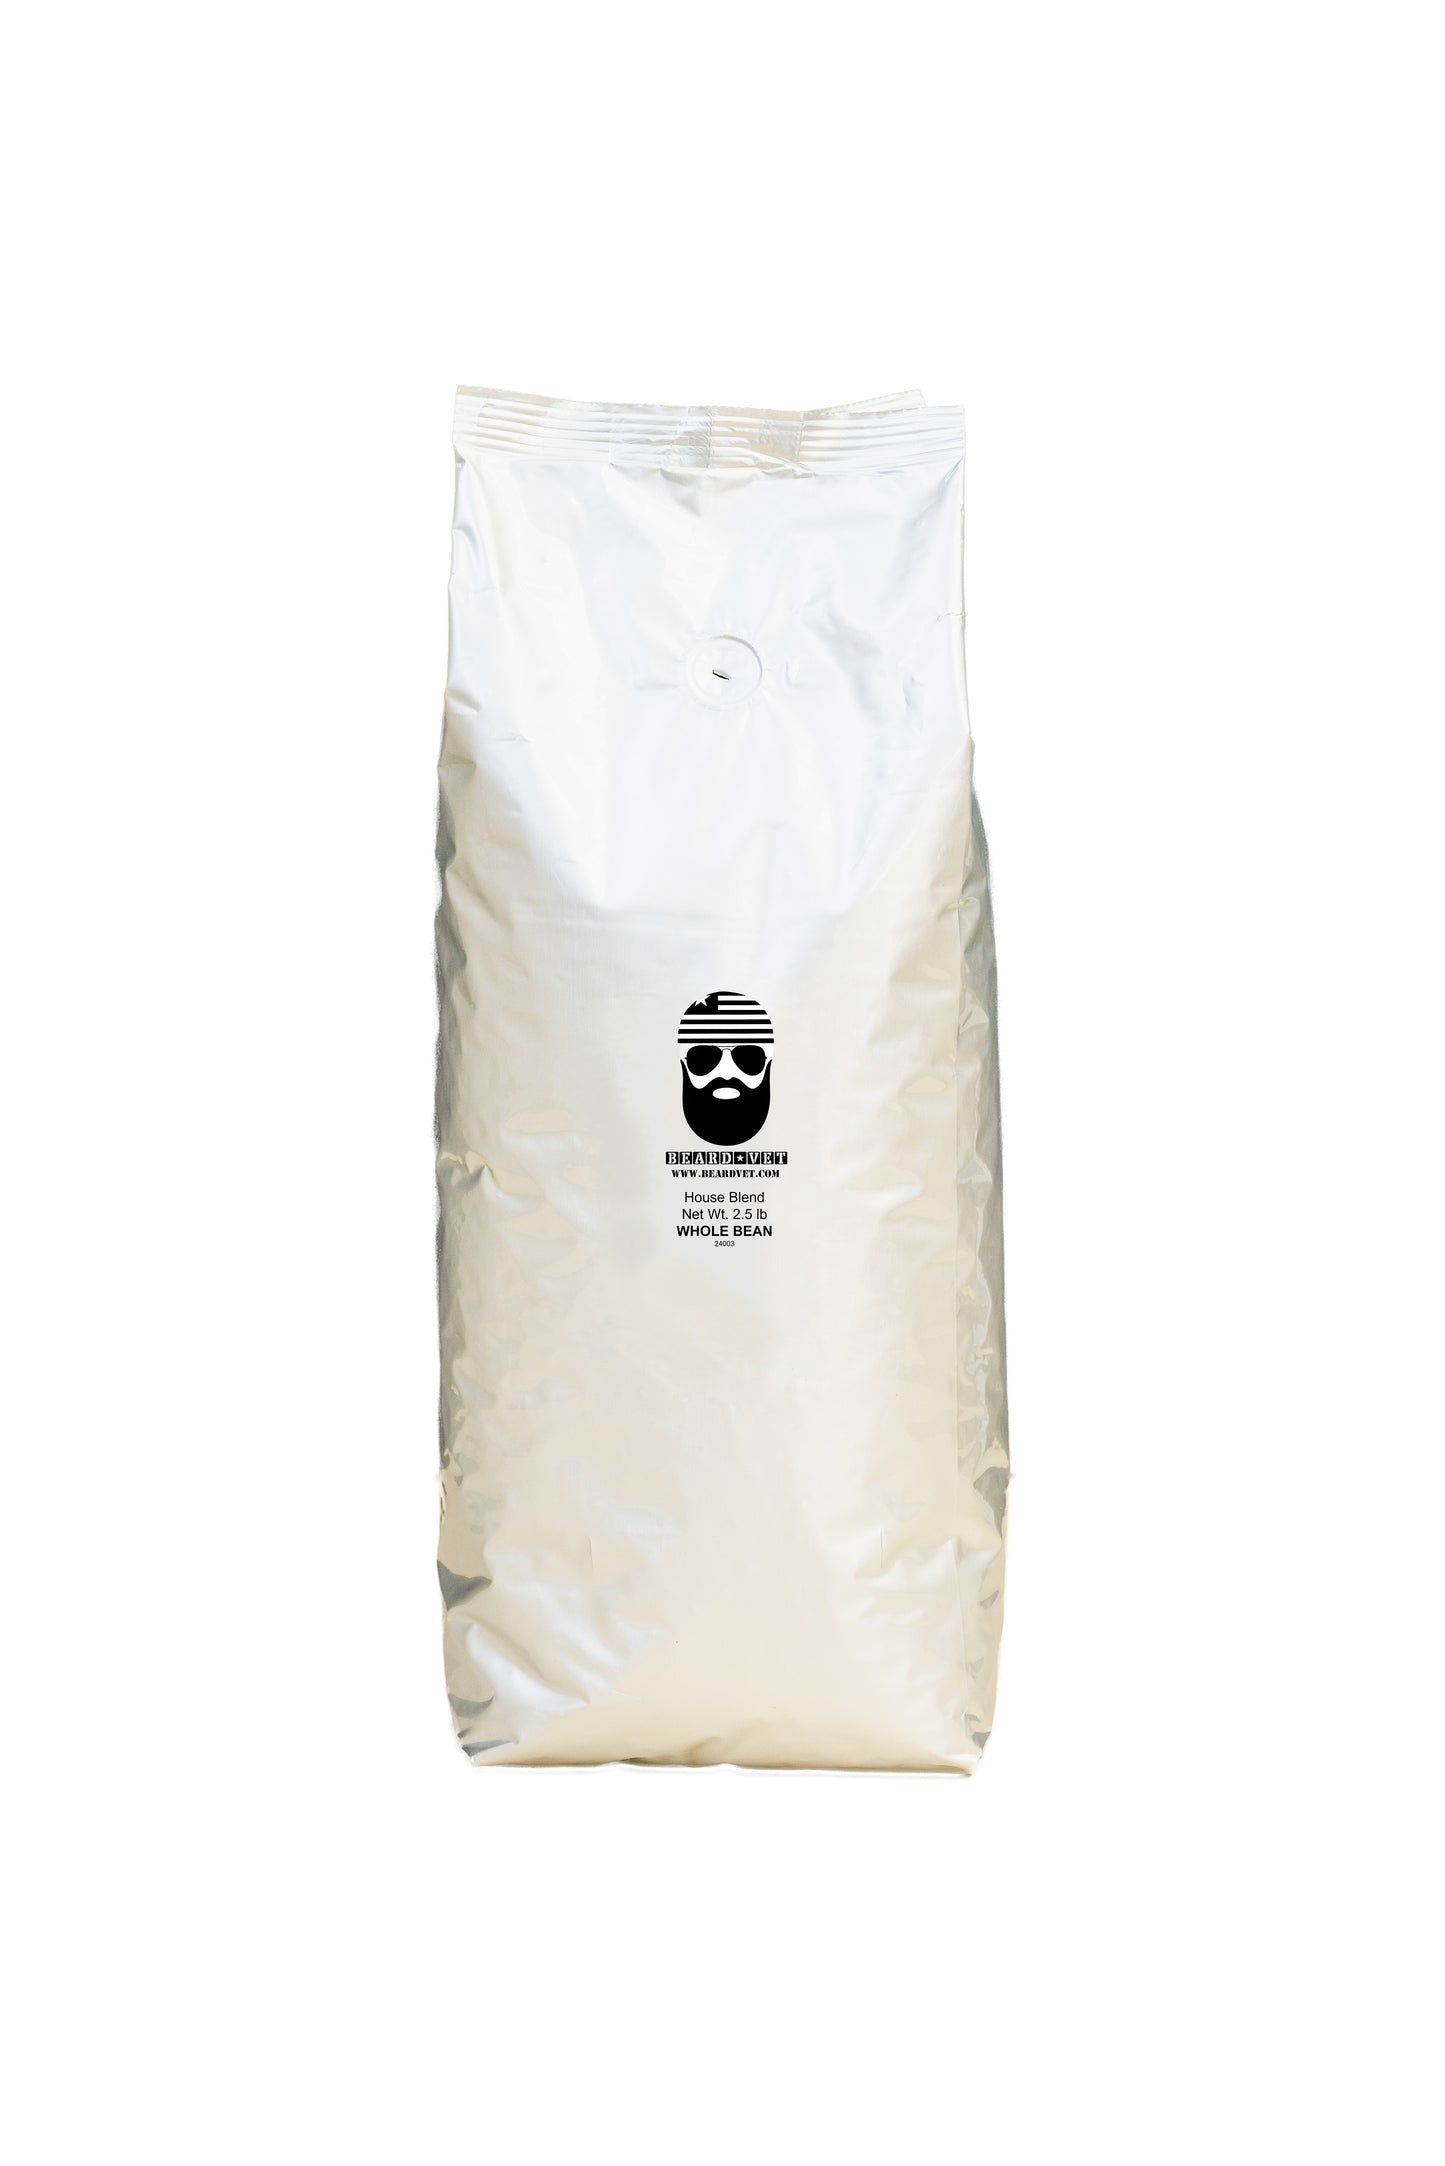 2.5 lb bag - House Blend - WHOLE BEAN